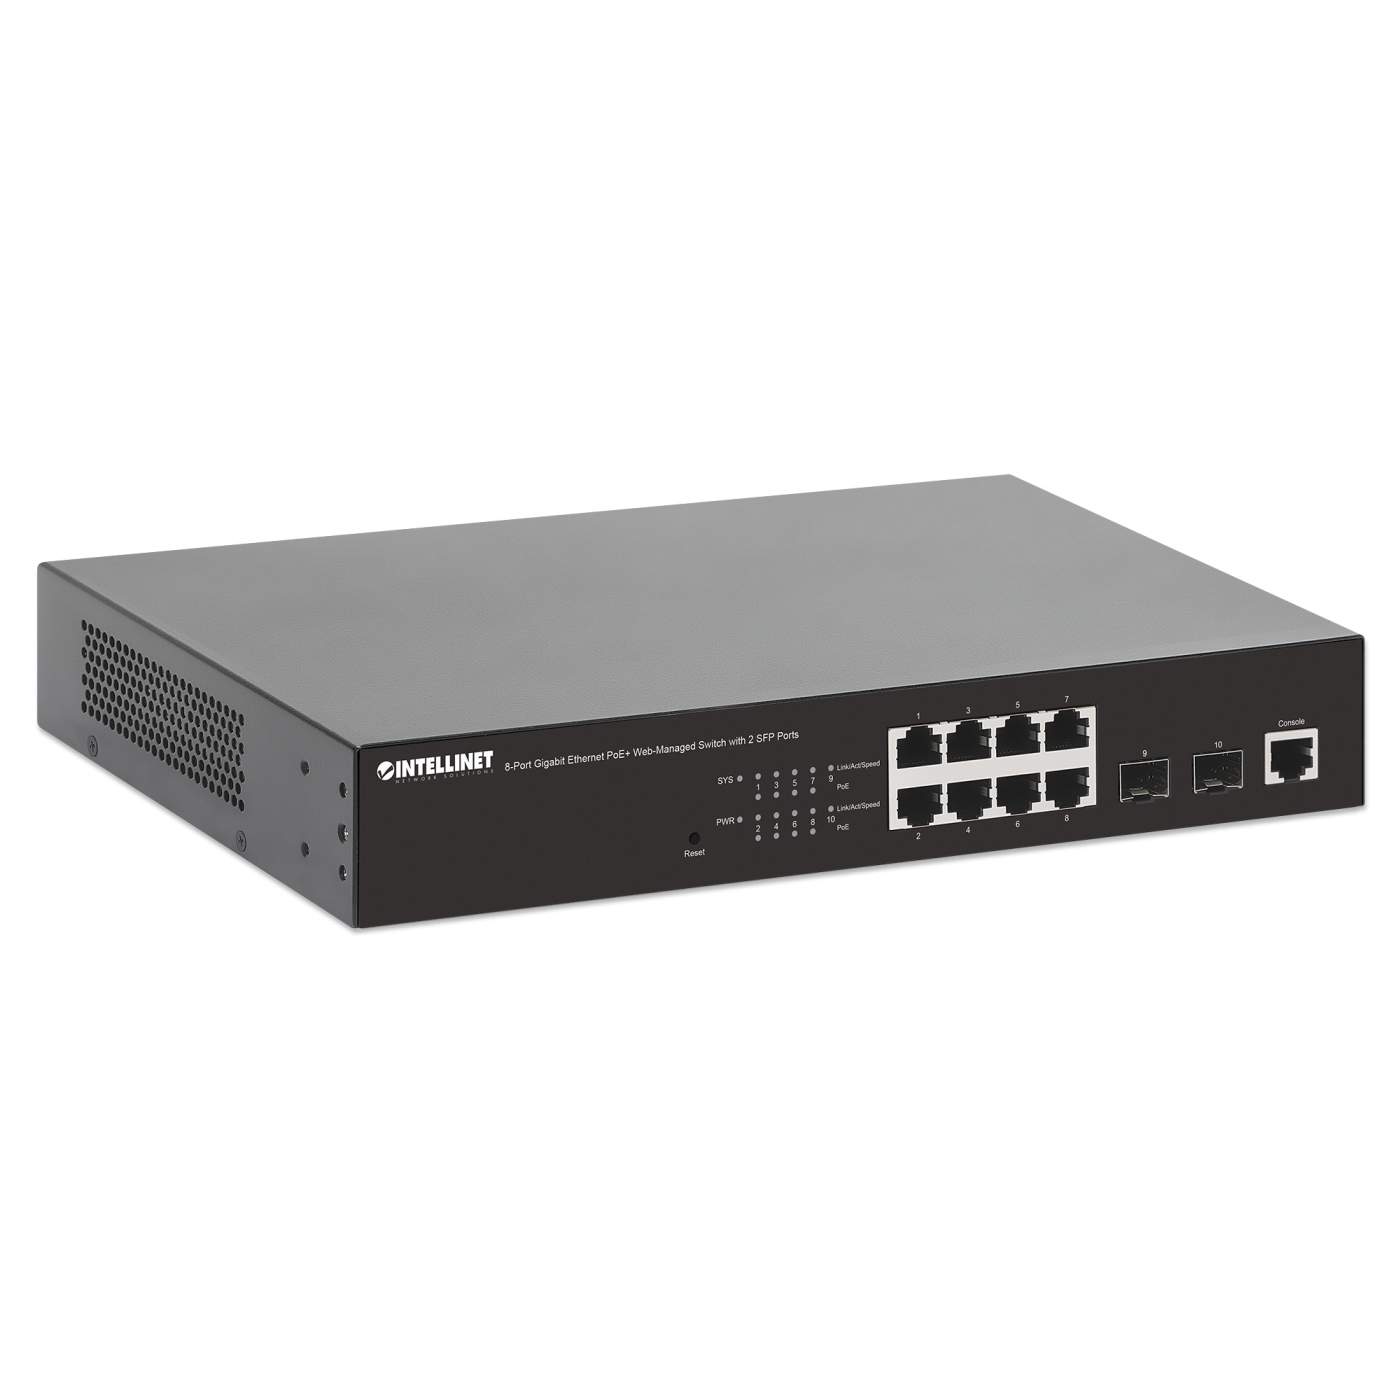 Intellinet 16-Port Gigabit Ethernet Switch (561068) – Intellinet Europe